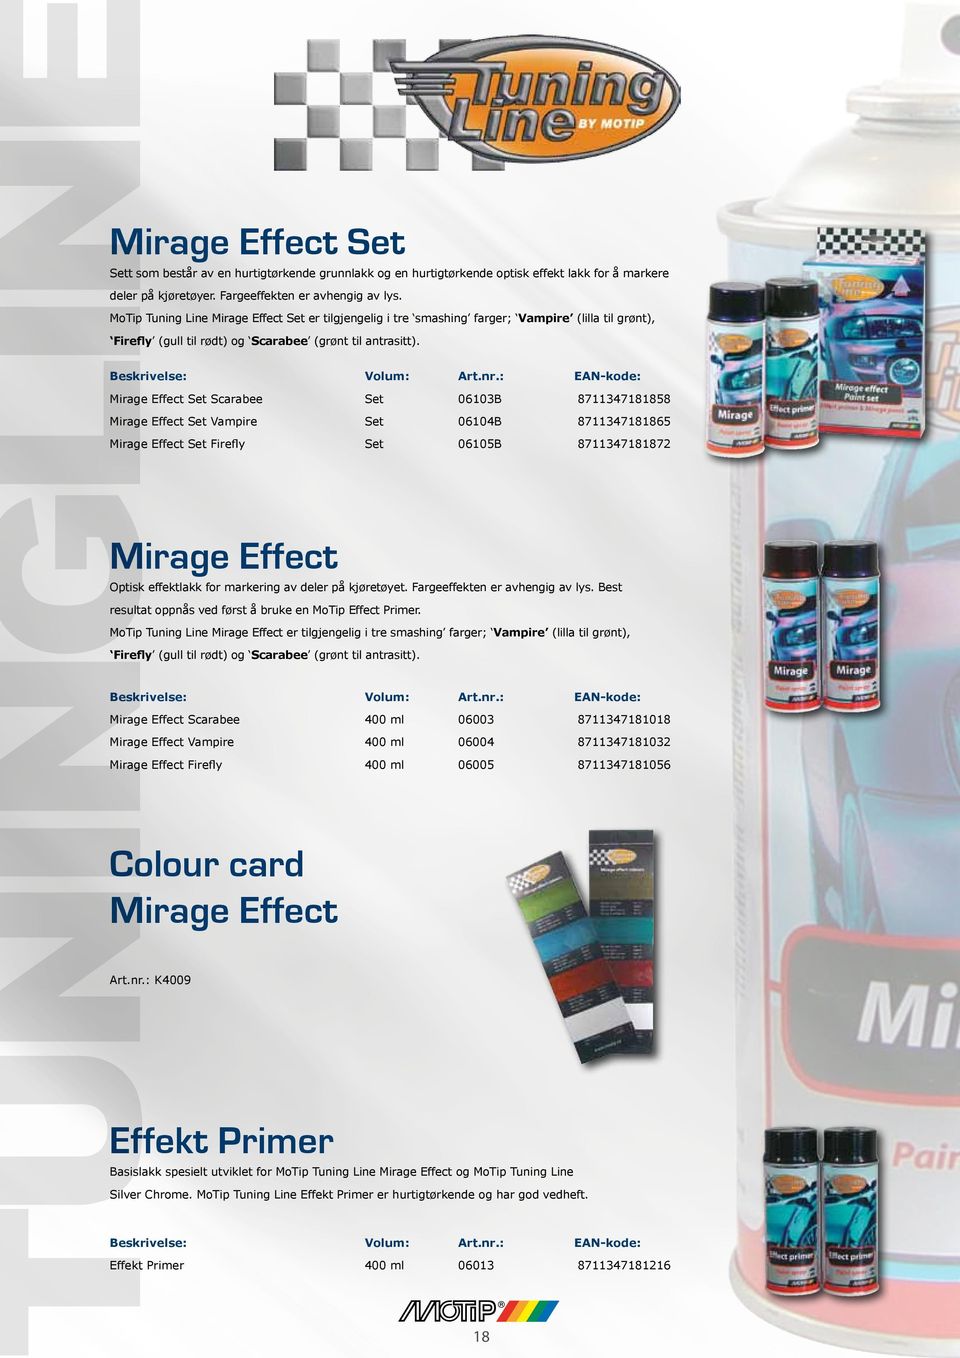 Mirage Effect Set Scarabee Set 06103B 8711347181858 Mirage Effect Set Vampire Set 06104B 8711347181865 Mirage Effect Set Firefly Set 06105B 8711347181872 Mirage Effect Optisk effektlakk for markering